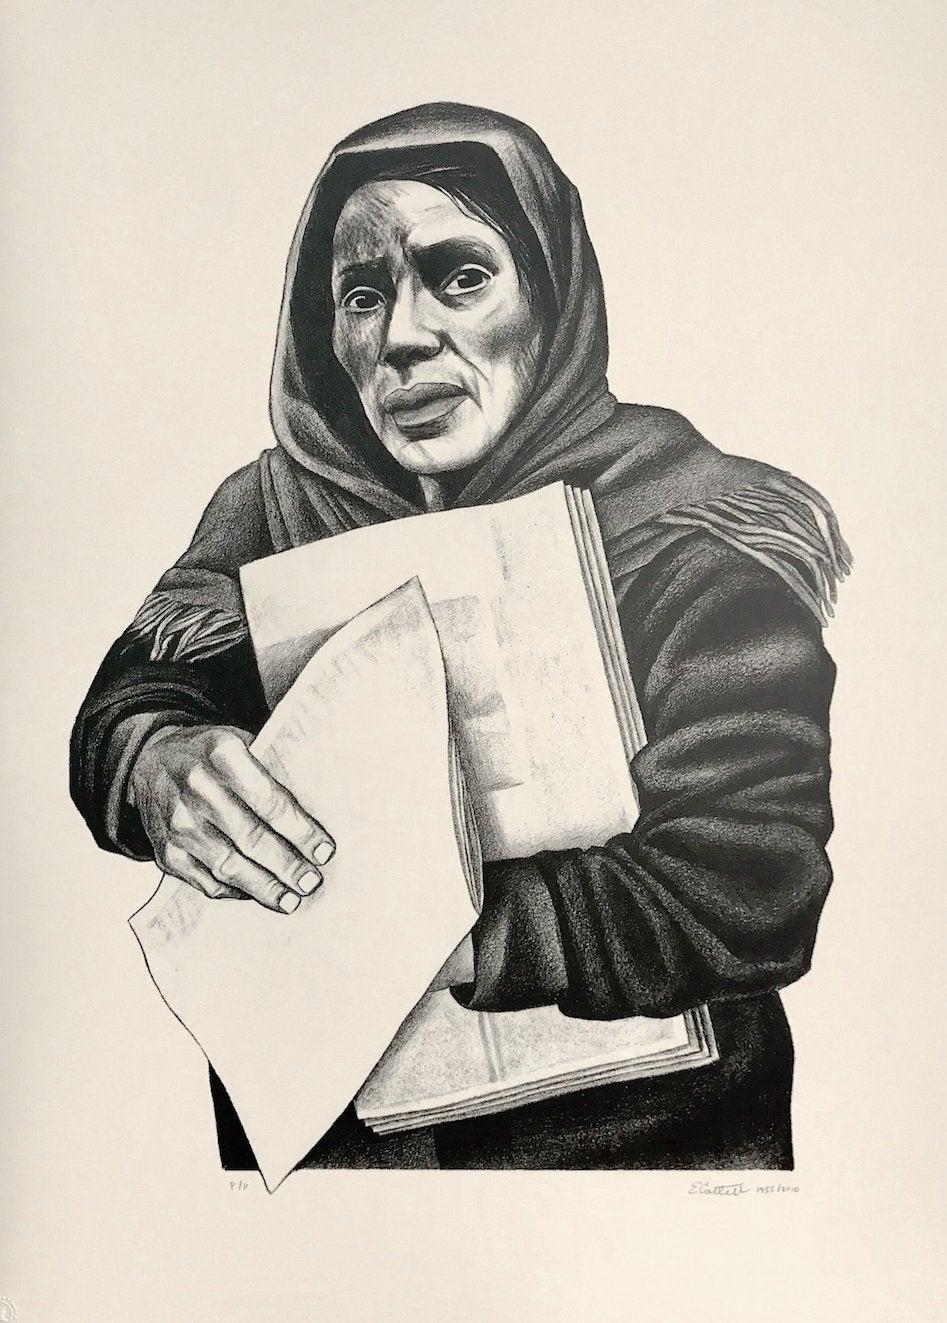 Elizabeth Catlett Portrait Print - VENDEDORA DE PERIÓDICOS Signed Lithograph, Mexican Woman Newspaper Vendor